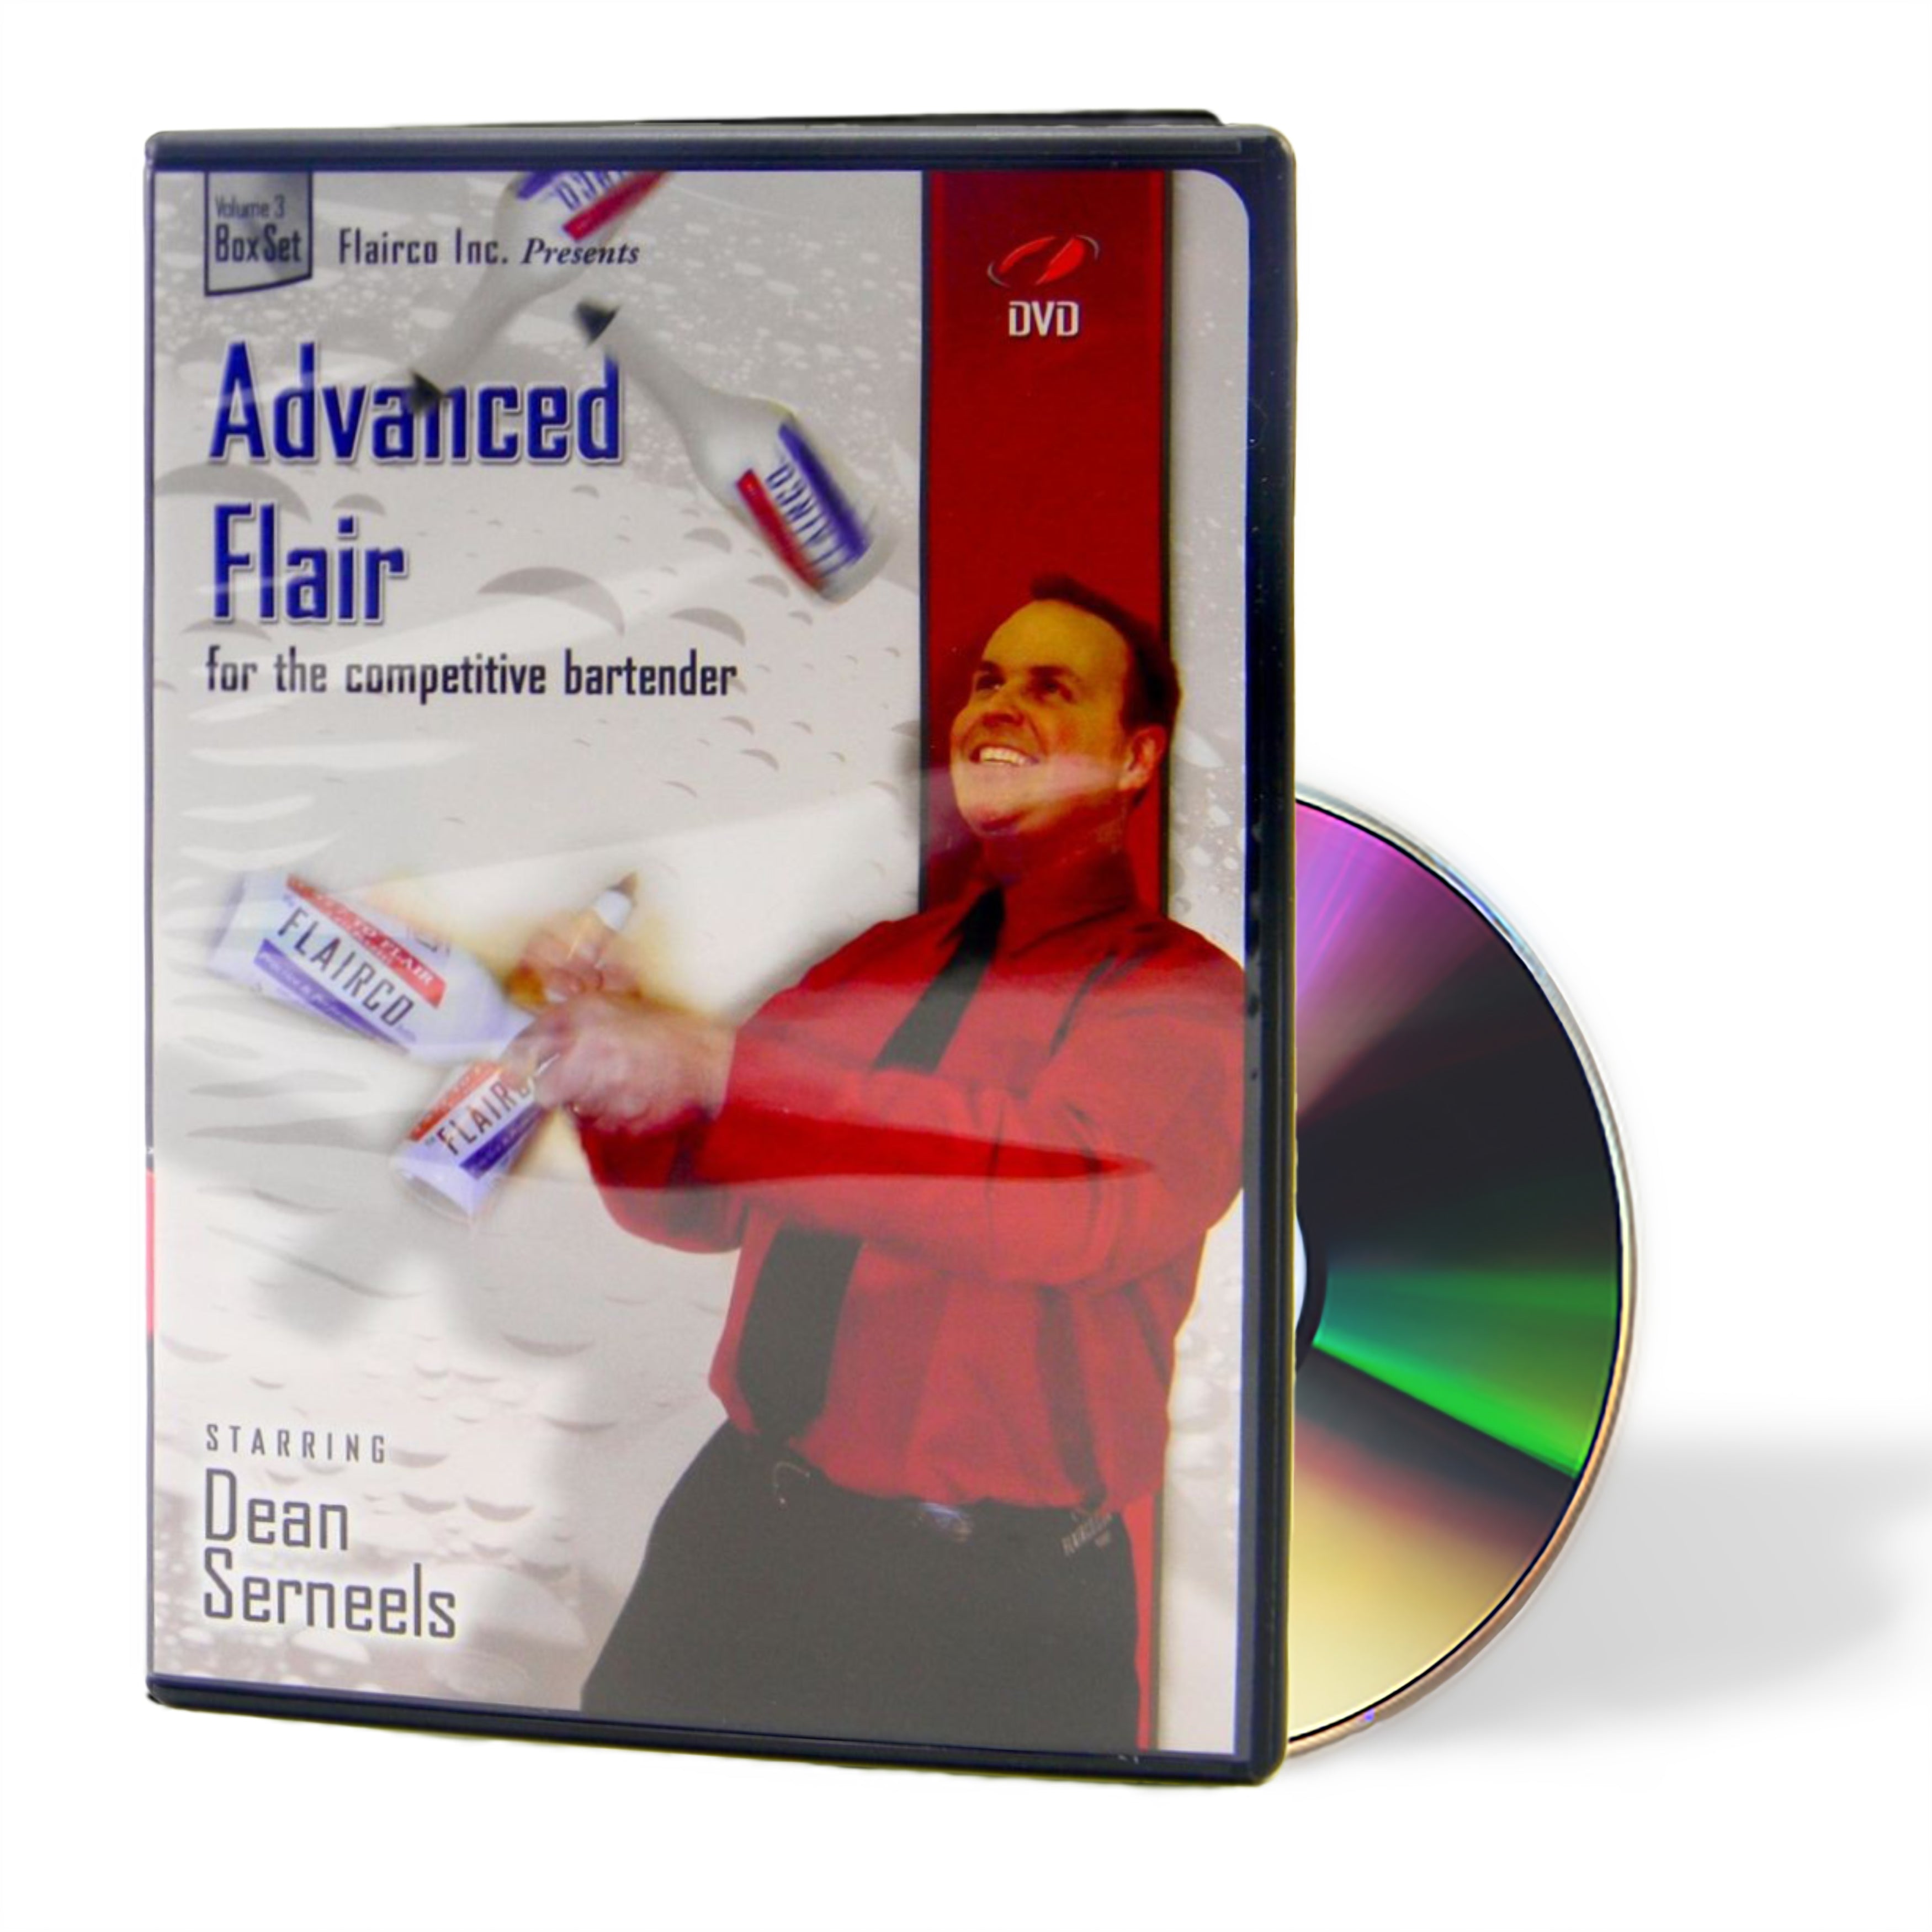 Flairco Advanced Flair Vol 3